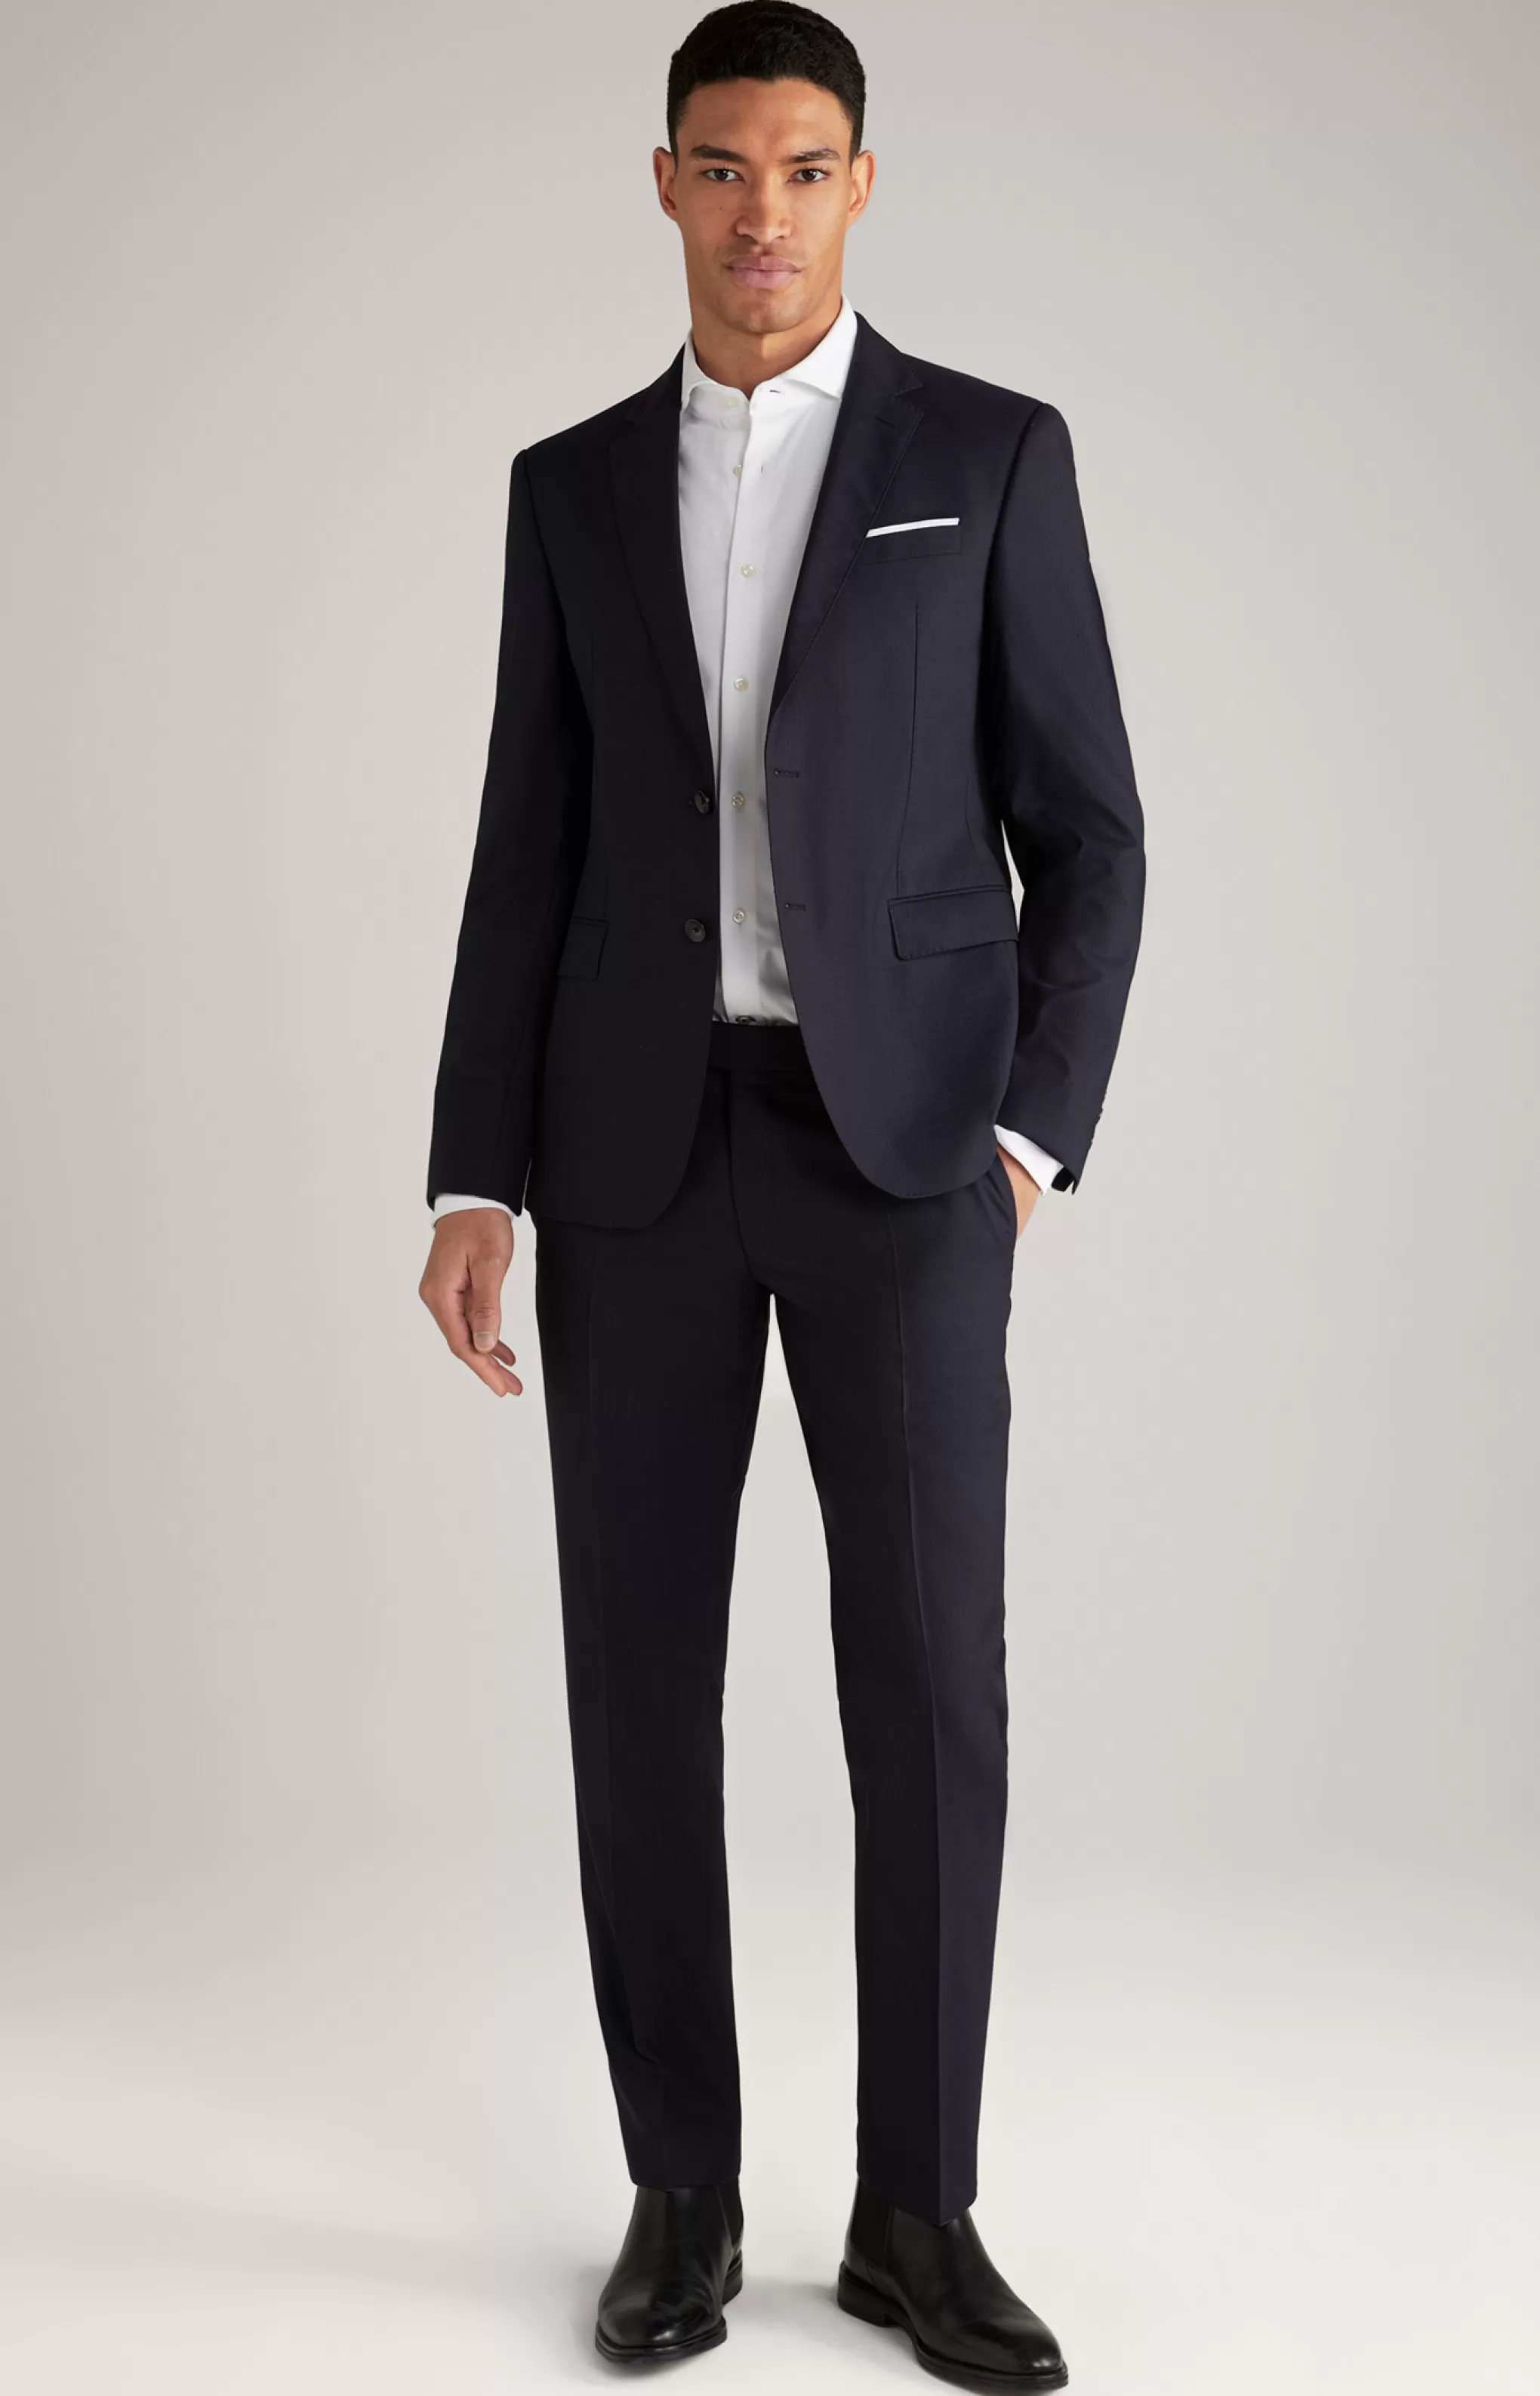 Suits | Clothing*JOOP Suits | Clothing Herby Blayr Virgin Wool Suit in